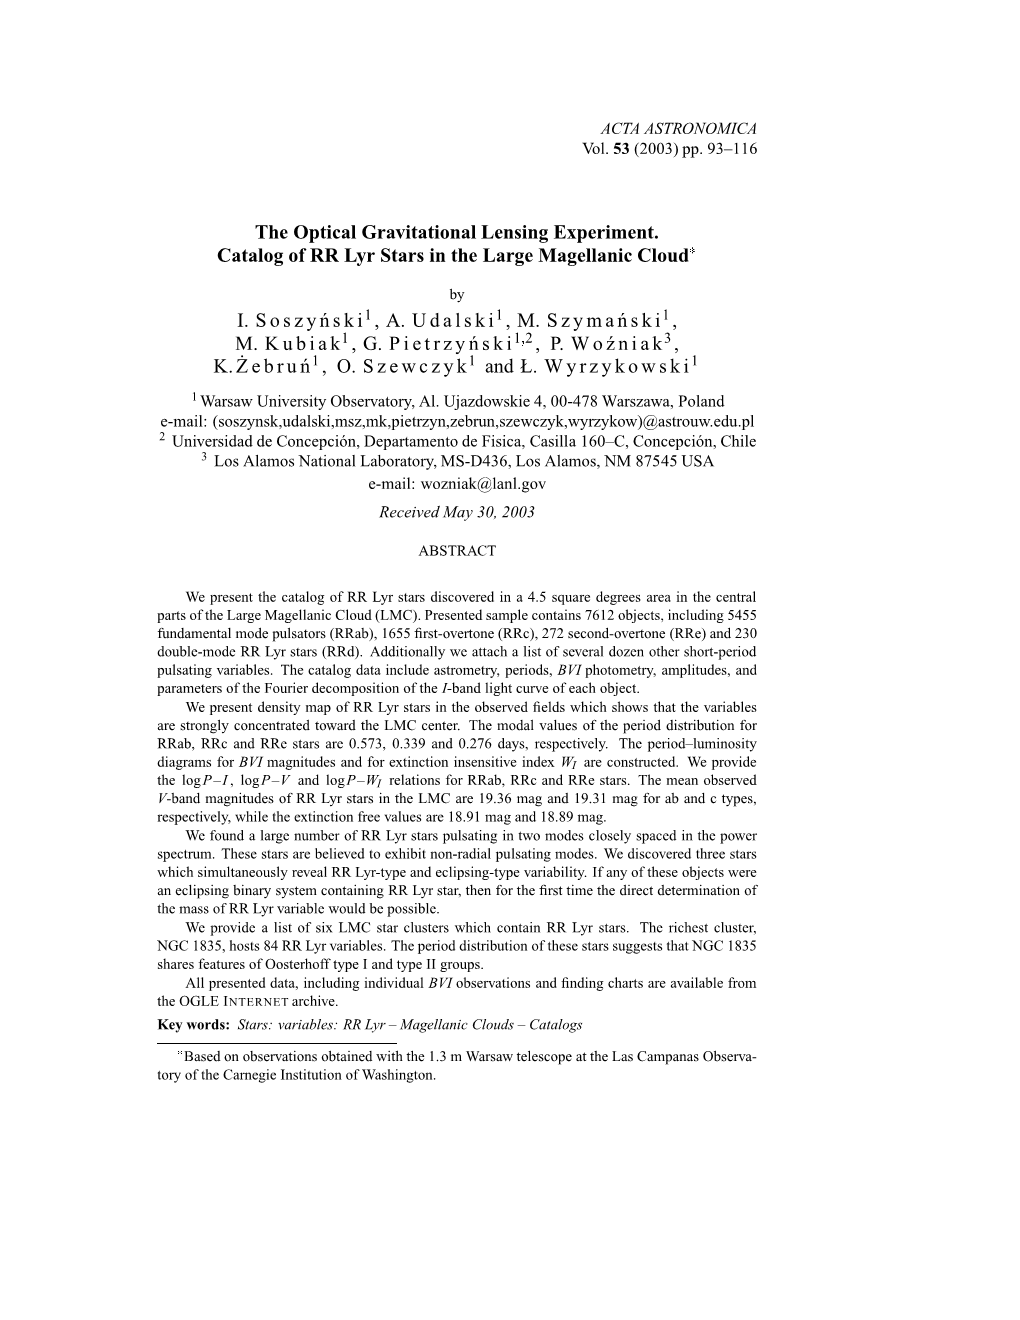 The Optical Gravitational Lensing Experiment. Catalog of RR Lyr